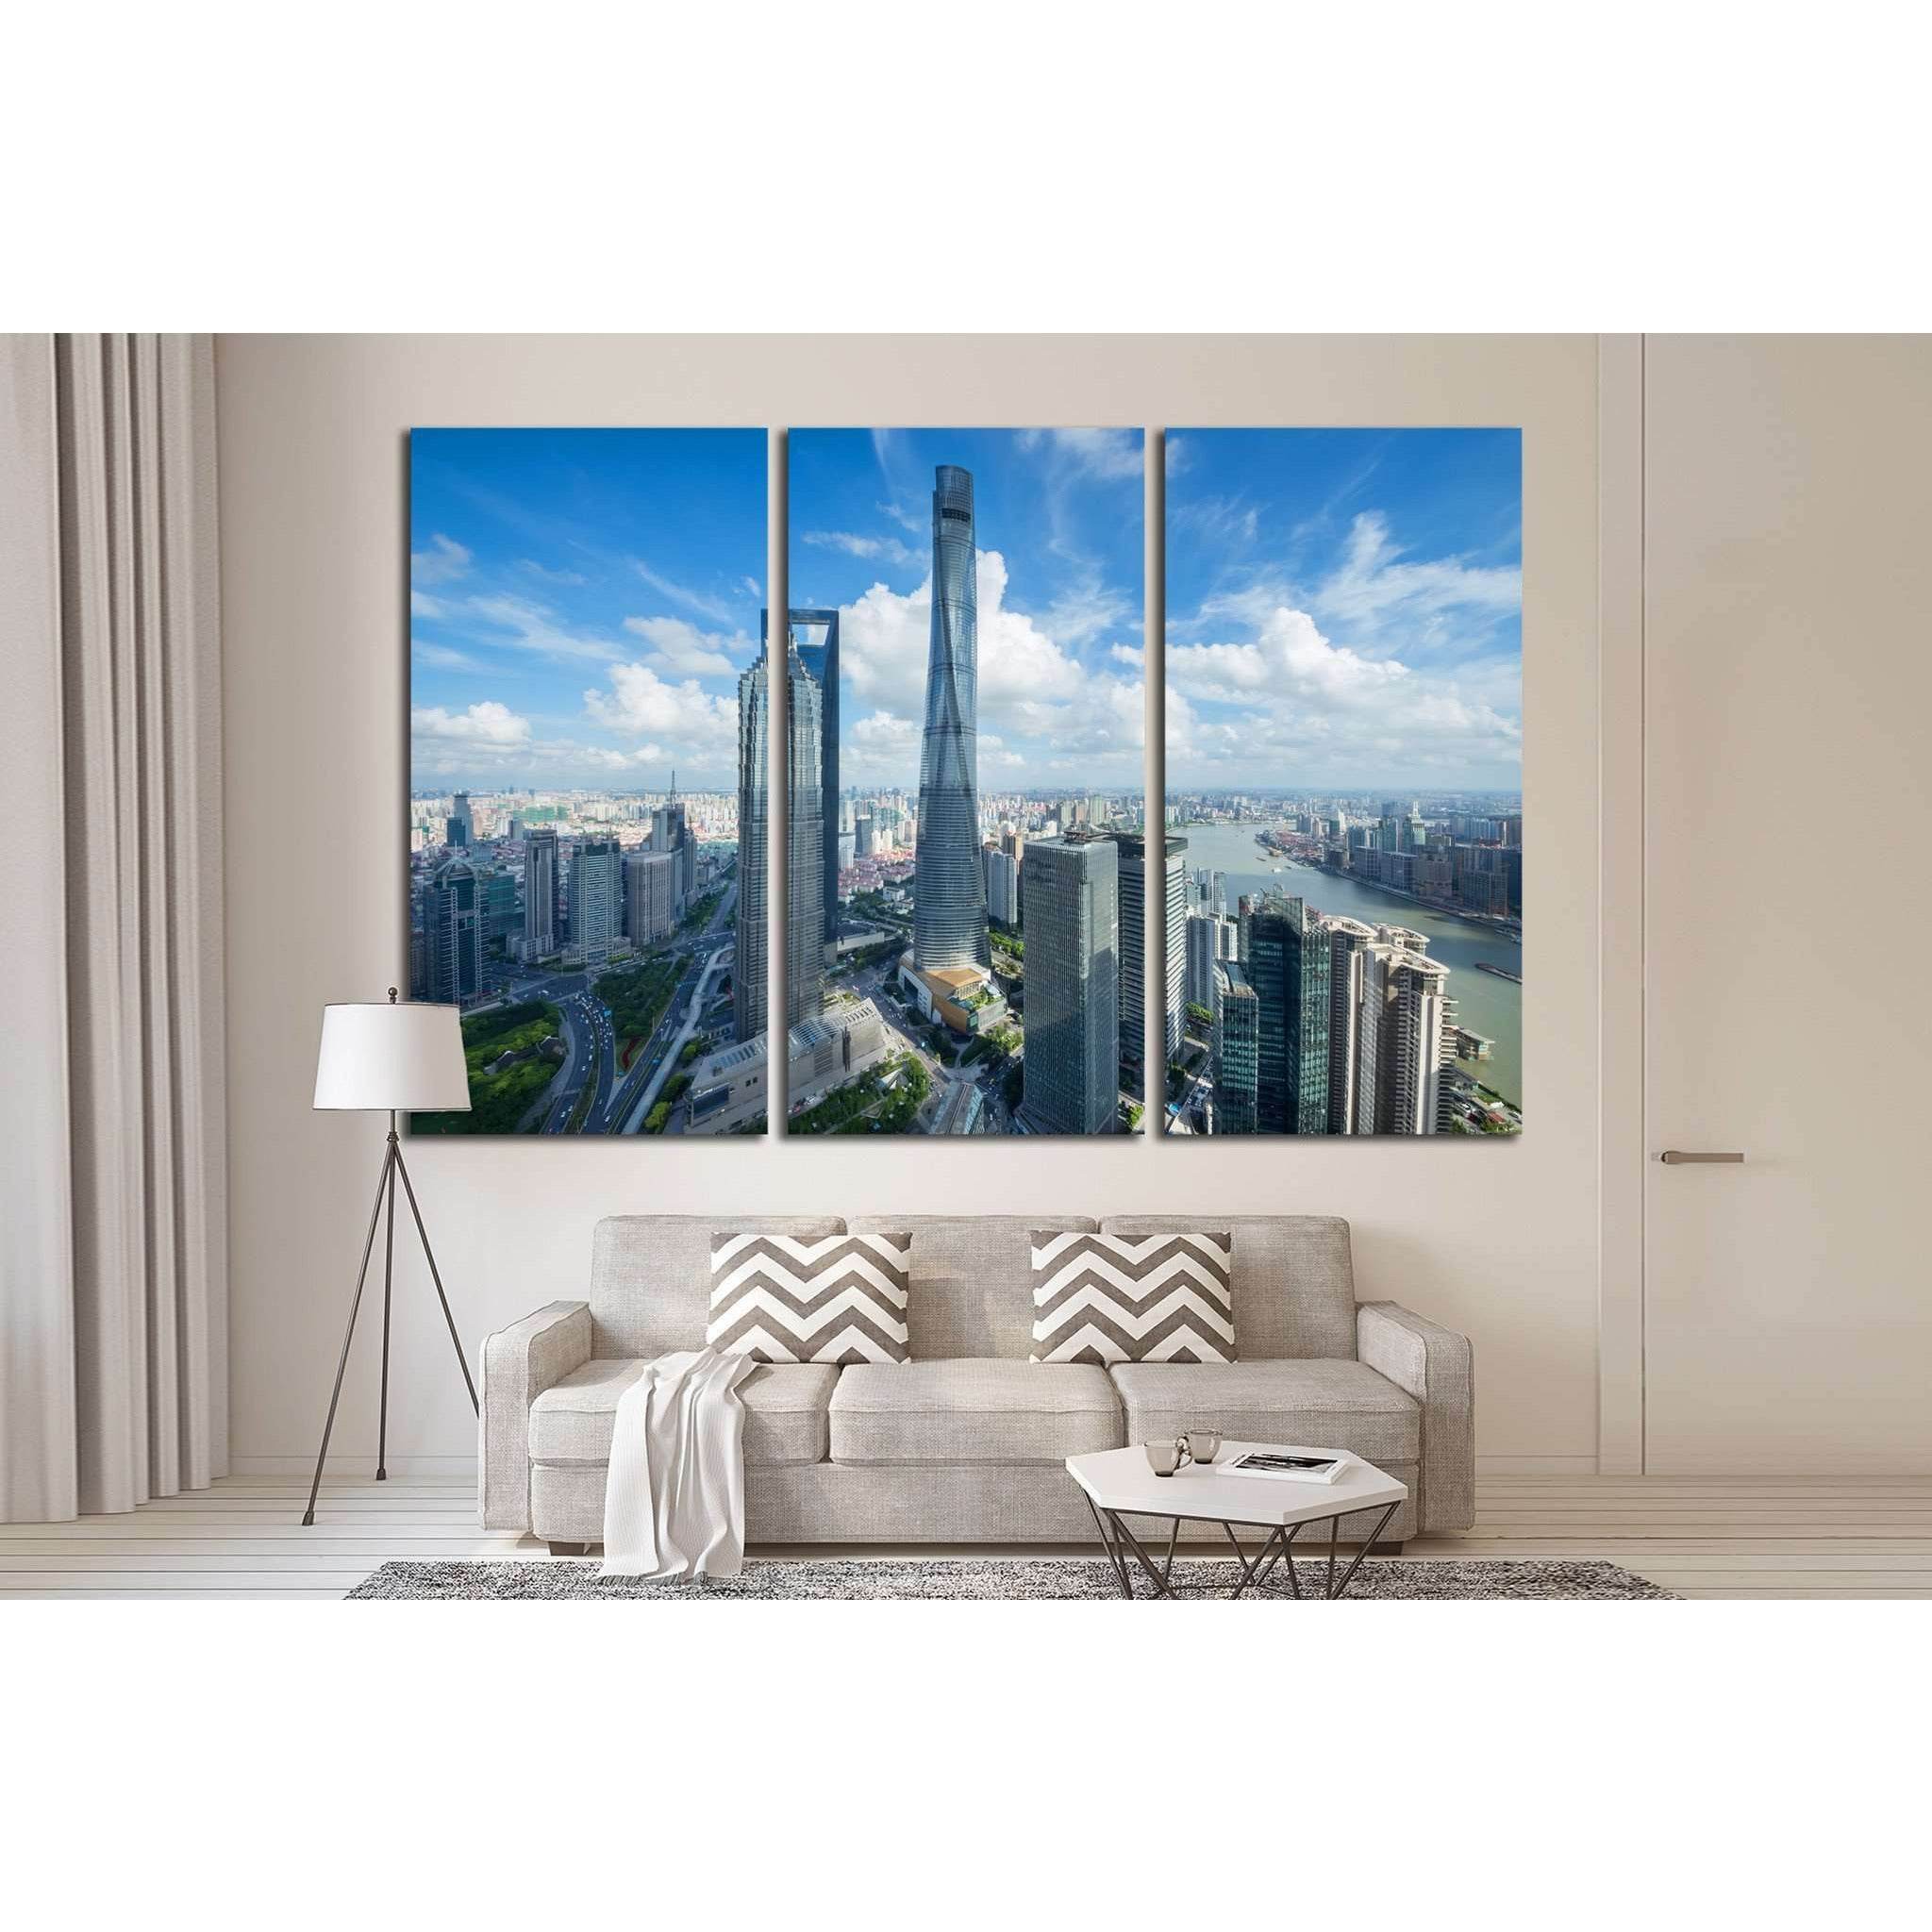 SHANGHAI, Jin Mao Tower, Shanghai tower №1549 Ready to Hang Canvas Print